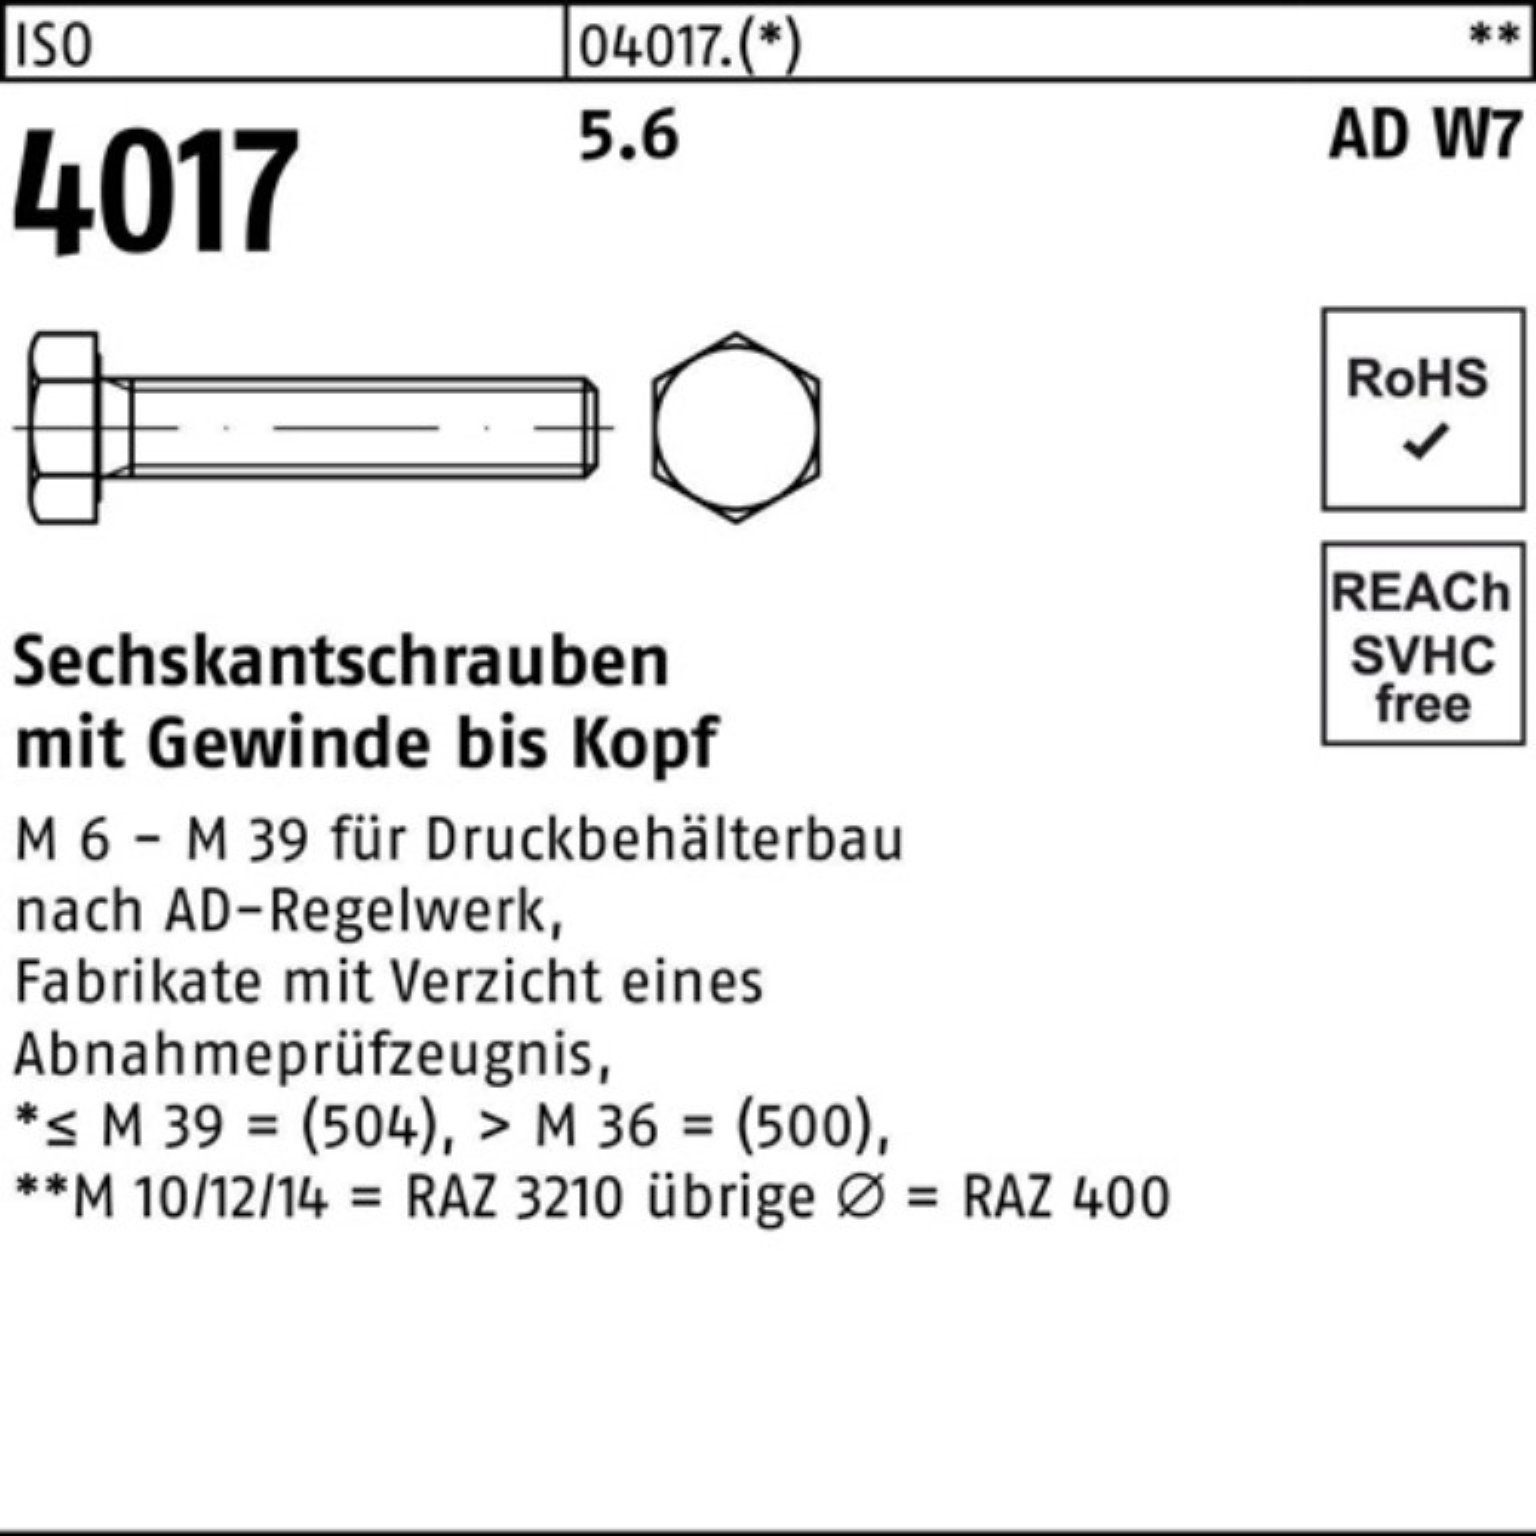 Bufab Sechskantschraube 100er Pack Sechskantschraube ISO 4017 VG M24x 80 5.6 AD W7 25 Stück I